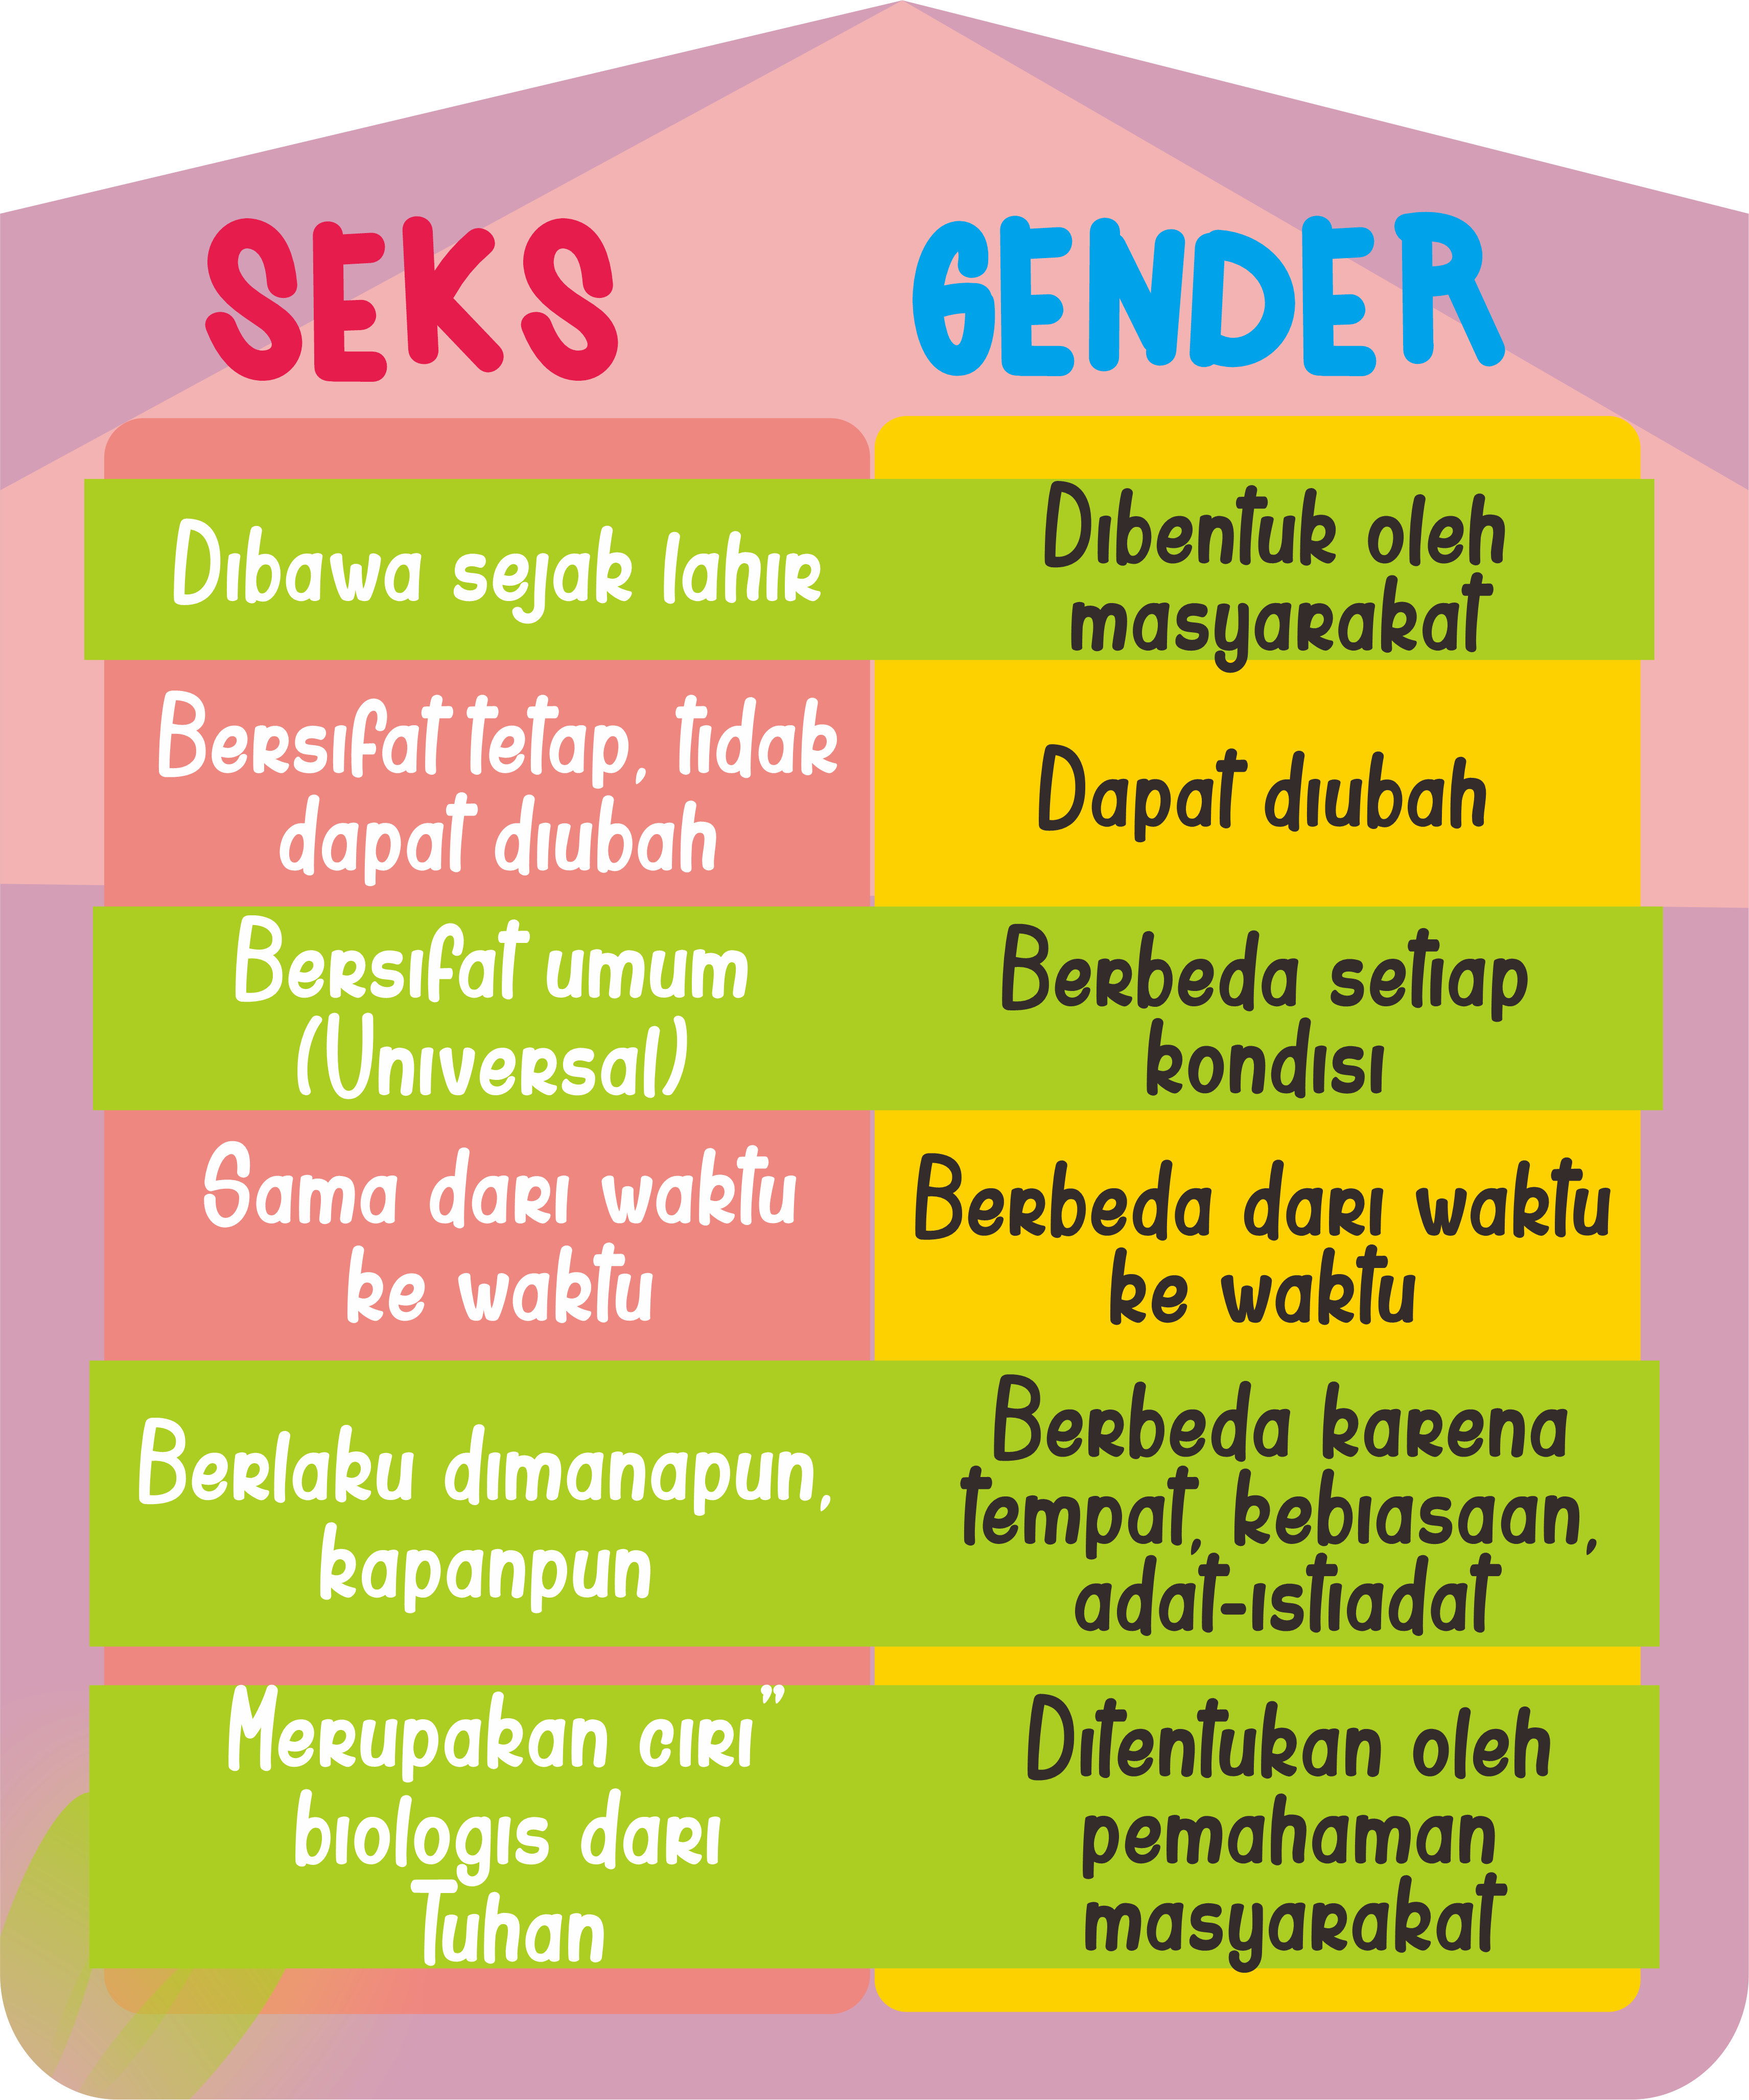 Perbedaan Seks dan Gender